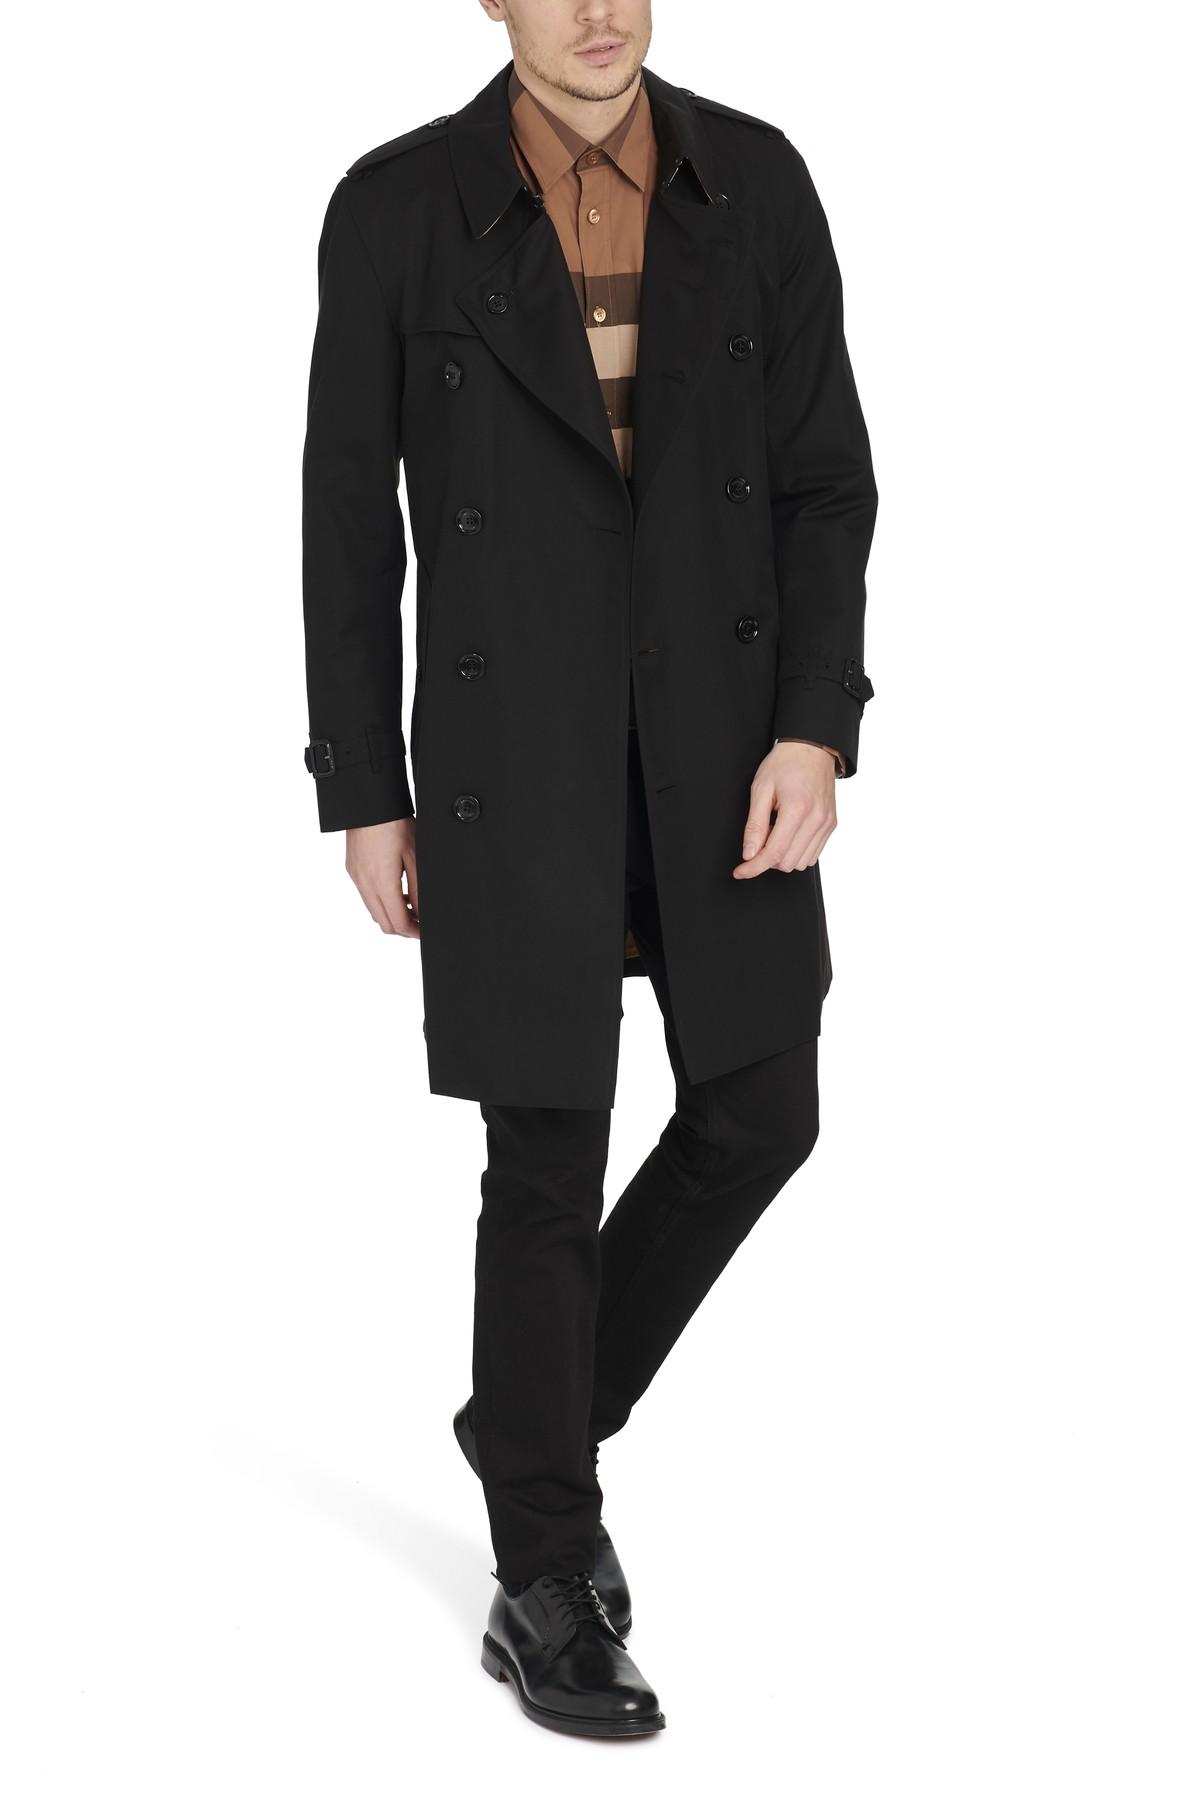 Burberry Chelsea Trench-coat in Black for Men - Lyst